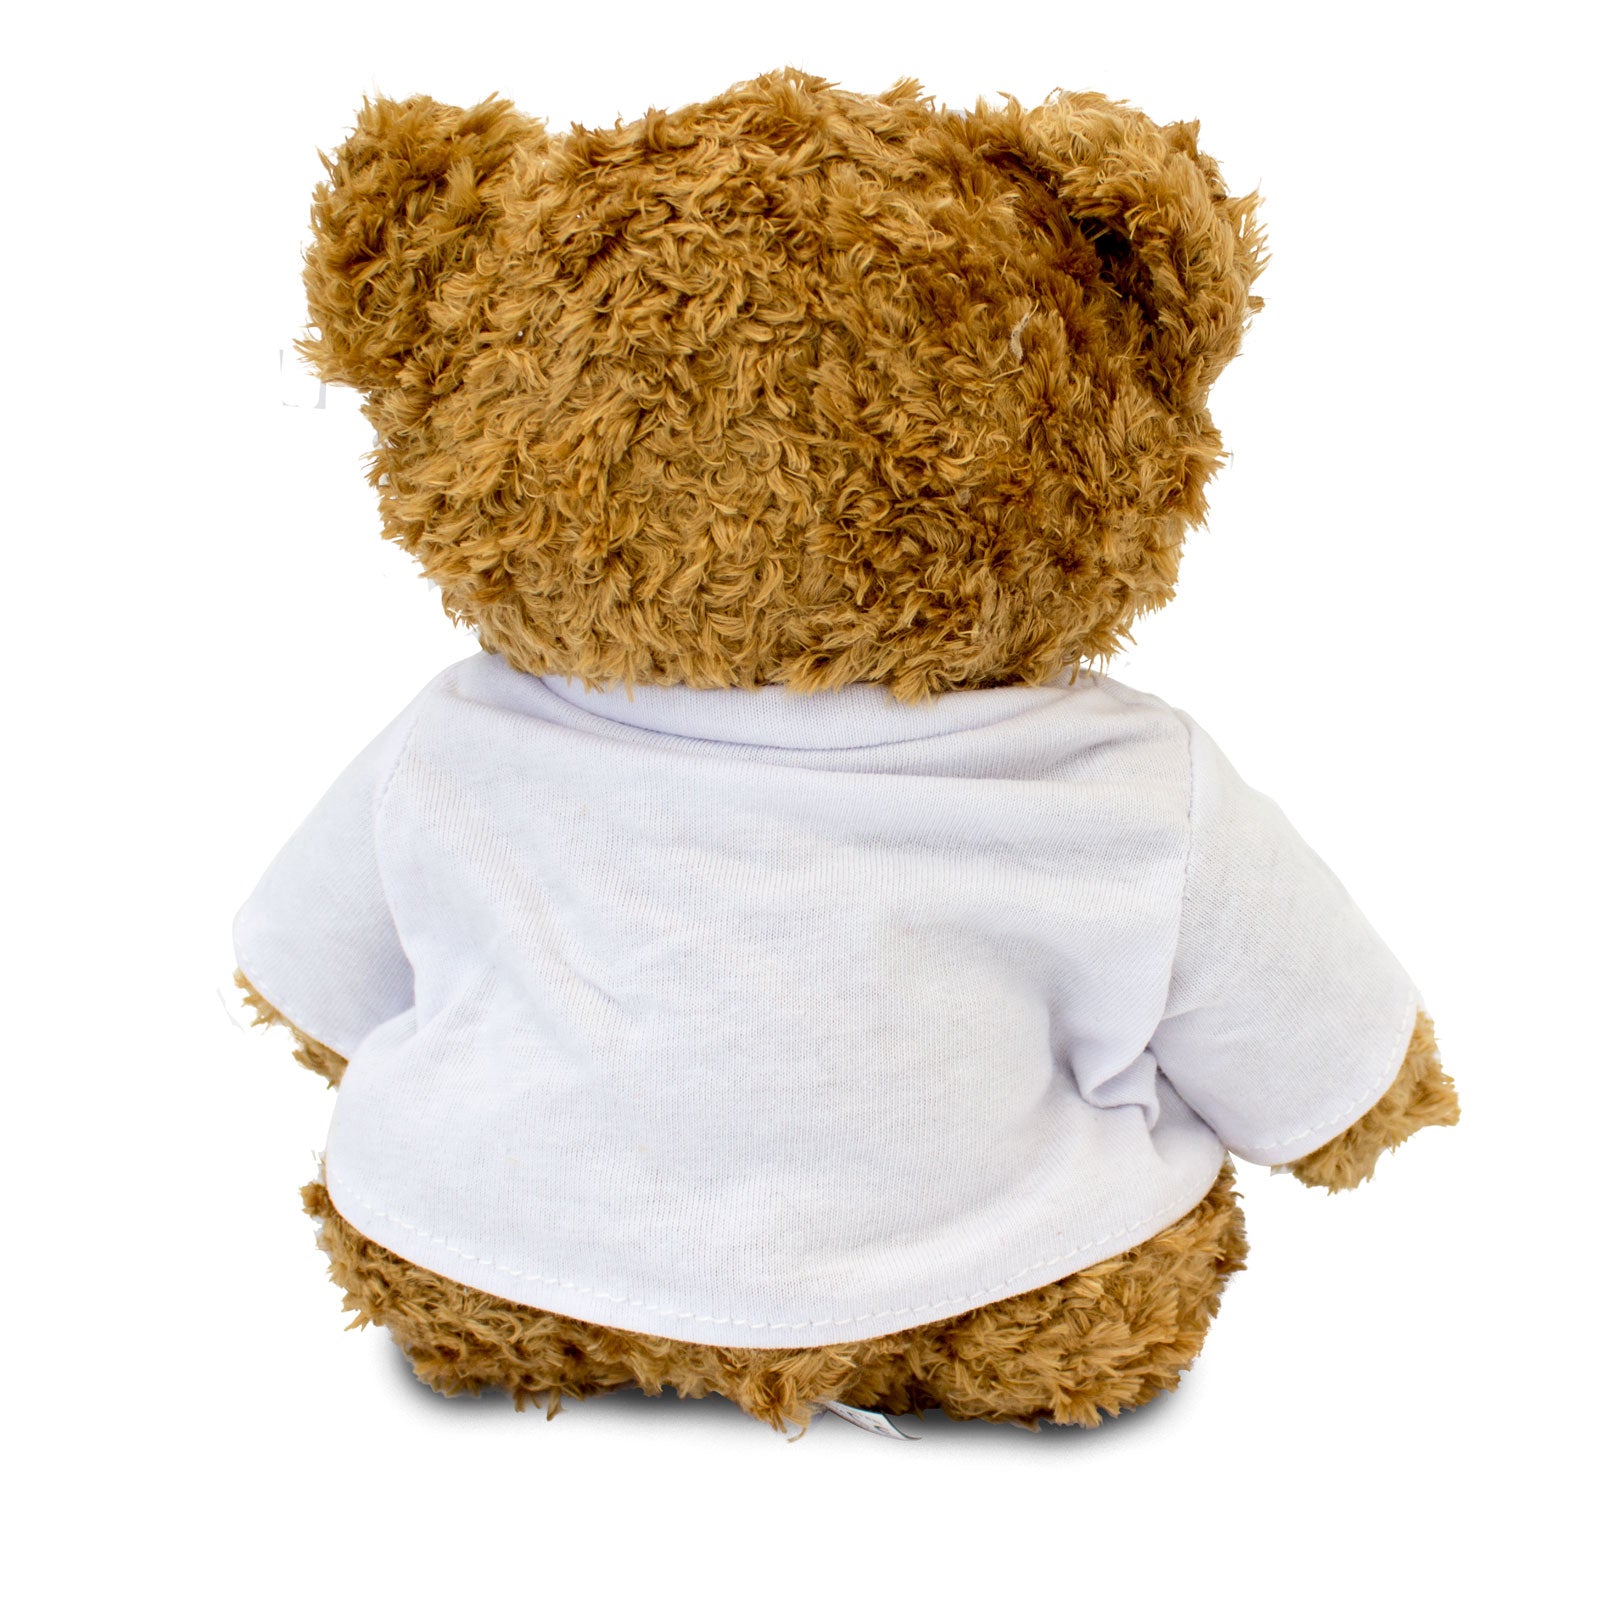 Get Well Soon Ernest - Teddy Bear